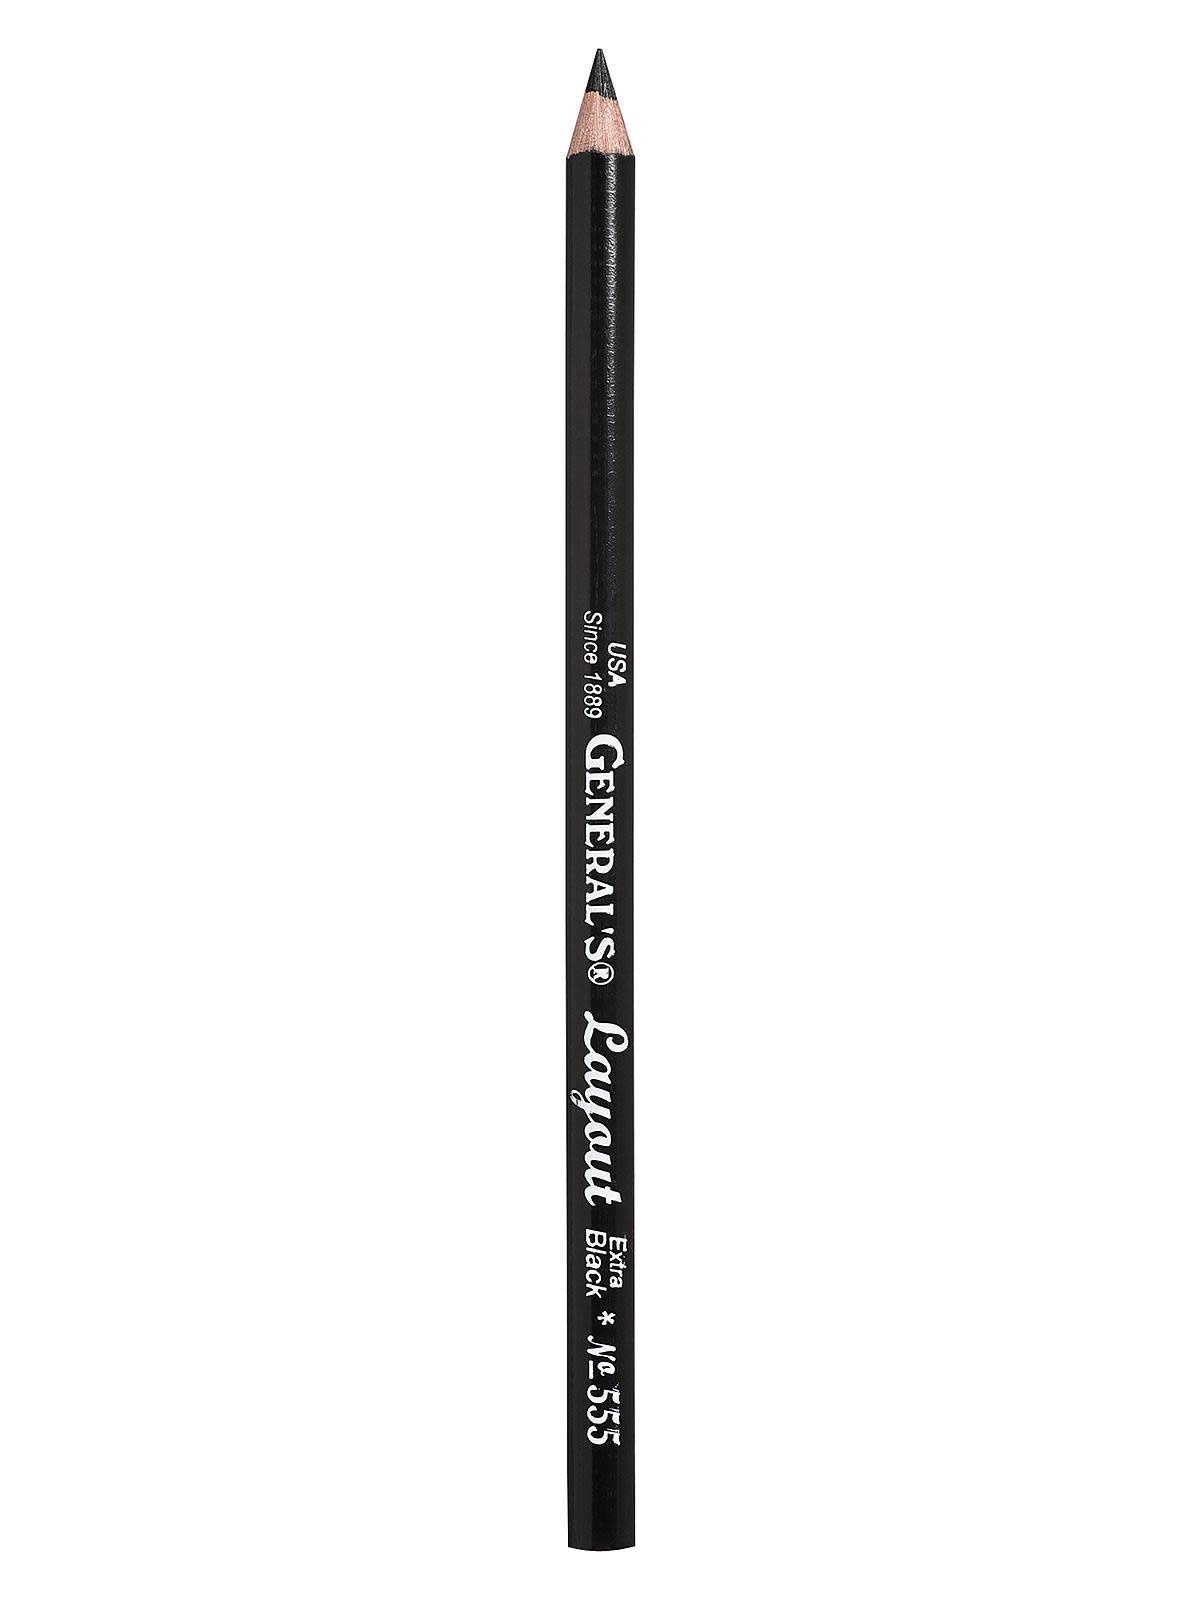 General Pencil Co. Inc. 555 Layout Ebony Drawing Pencil